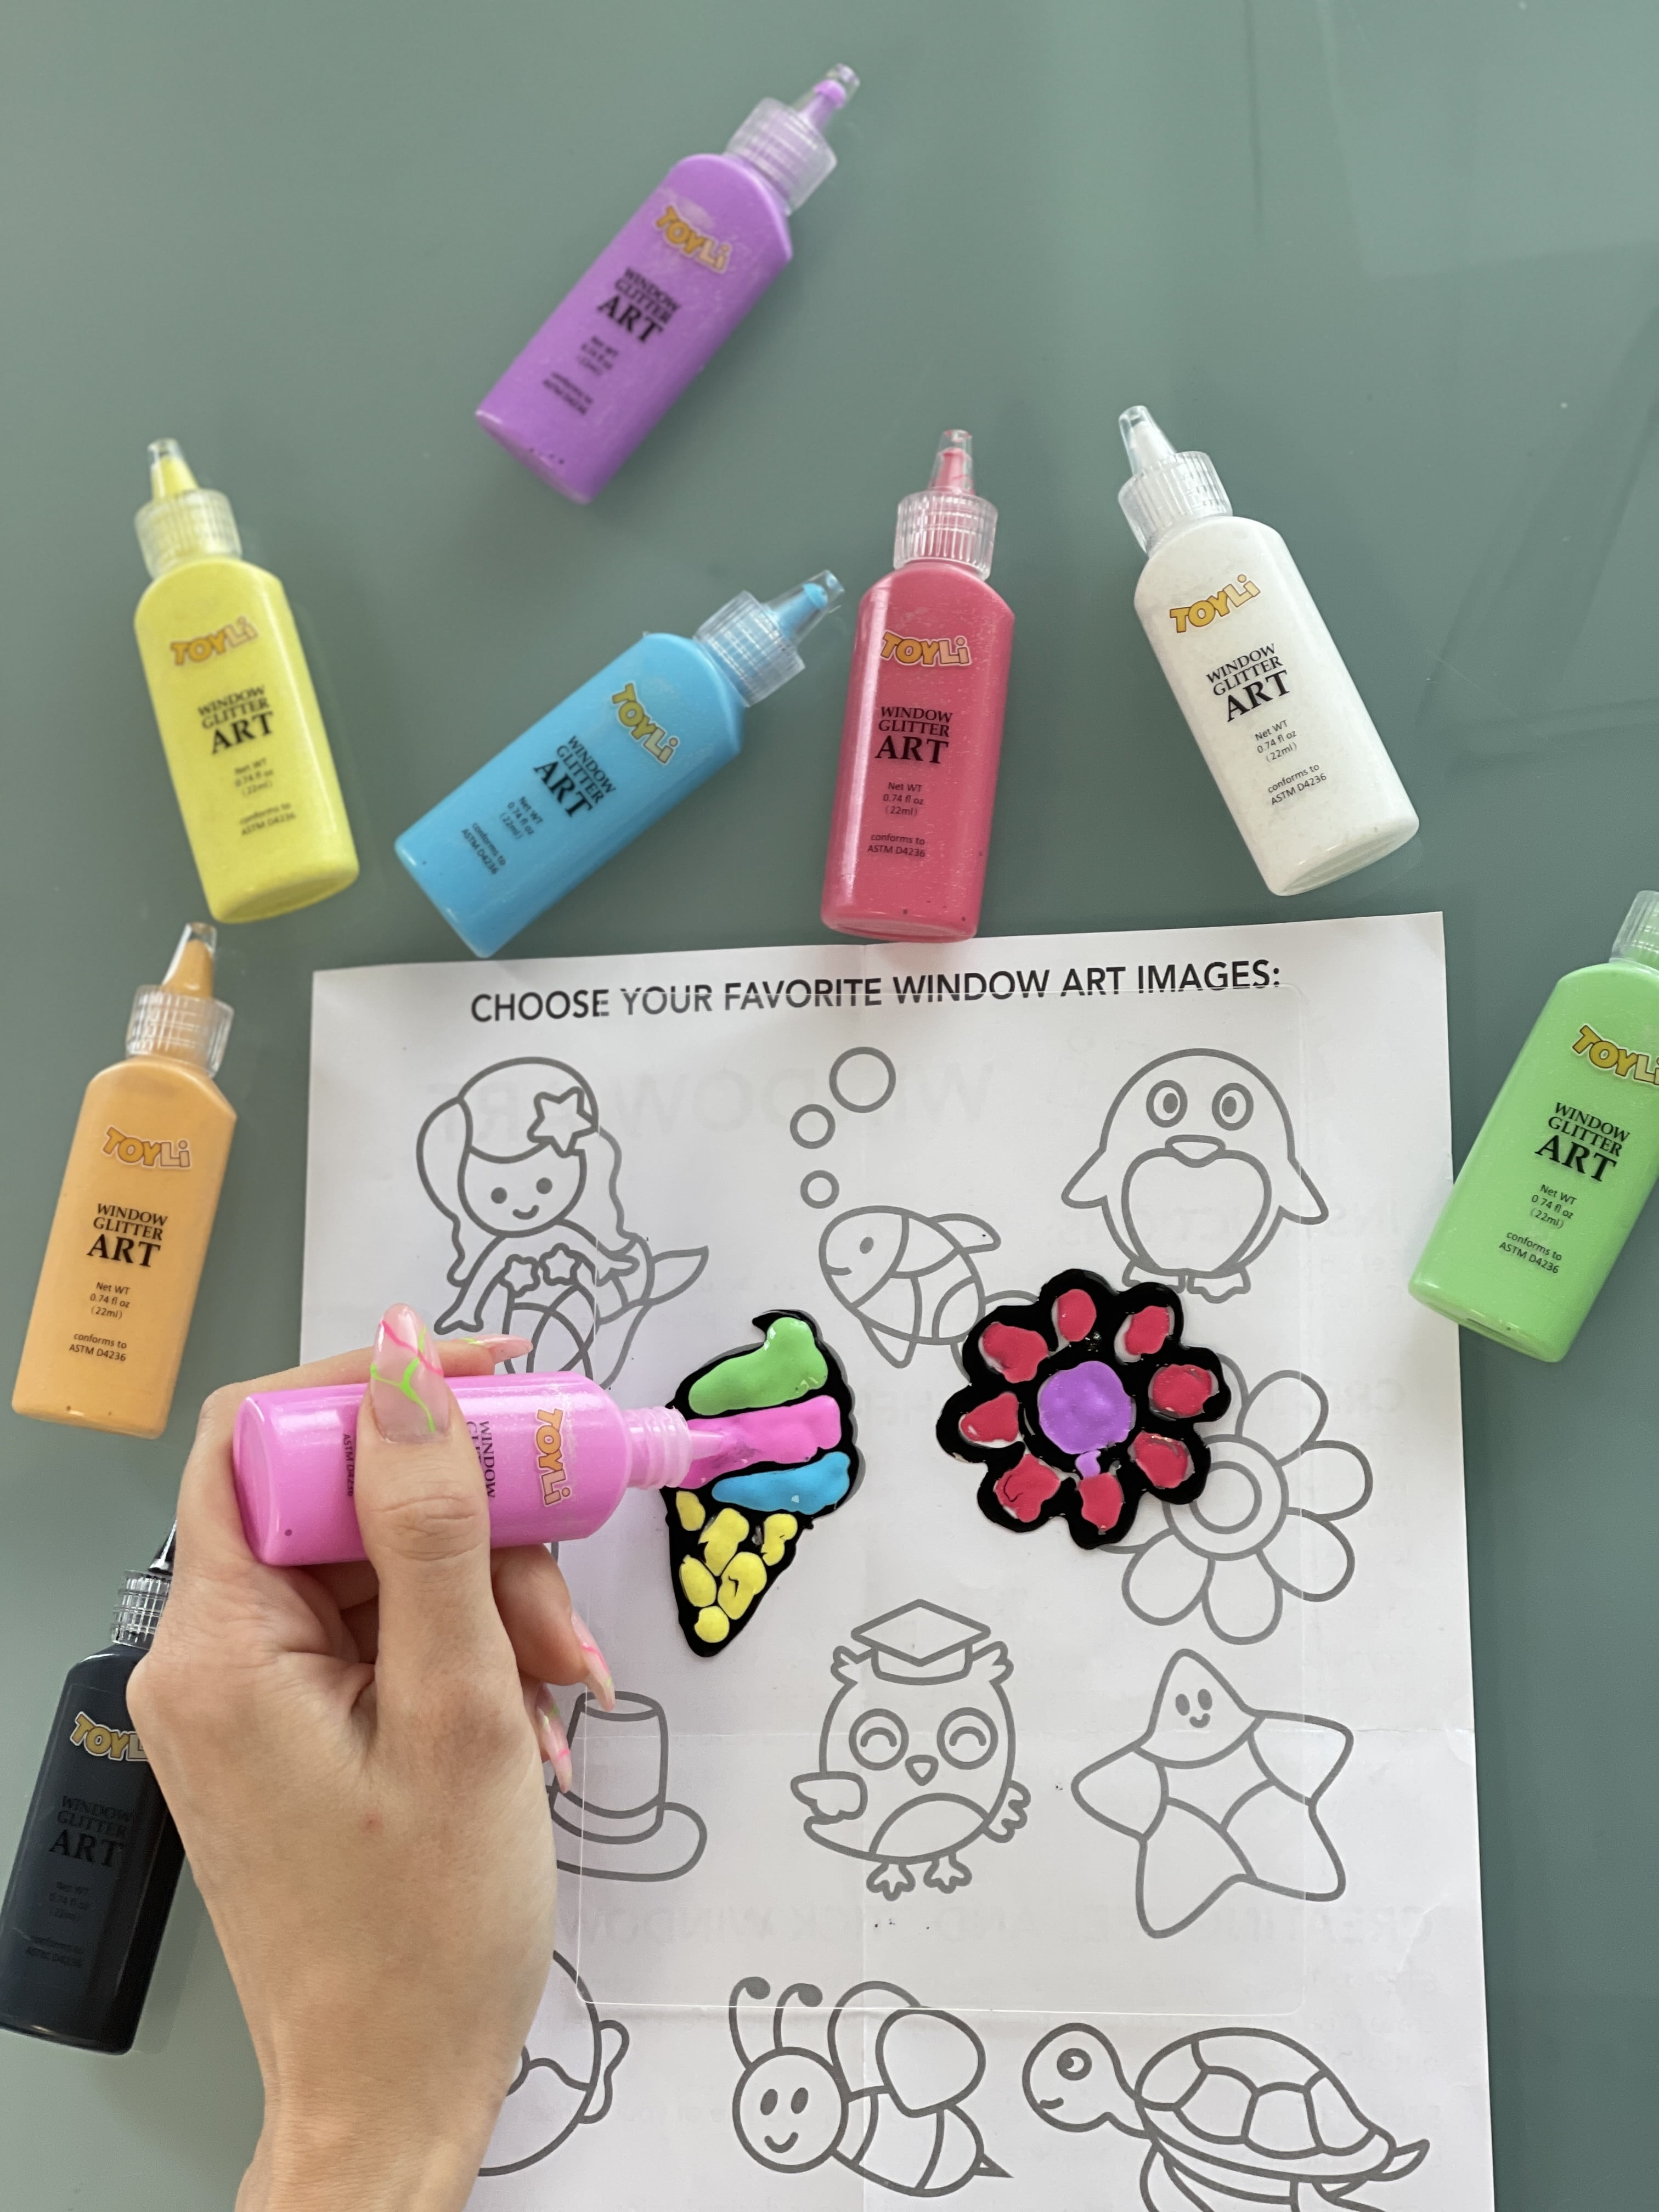 TOYLI Suncatcher Kits for Kids 26 Projects, Window Art Paint, Suncatcher  Kit for Kids 3+ 